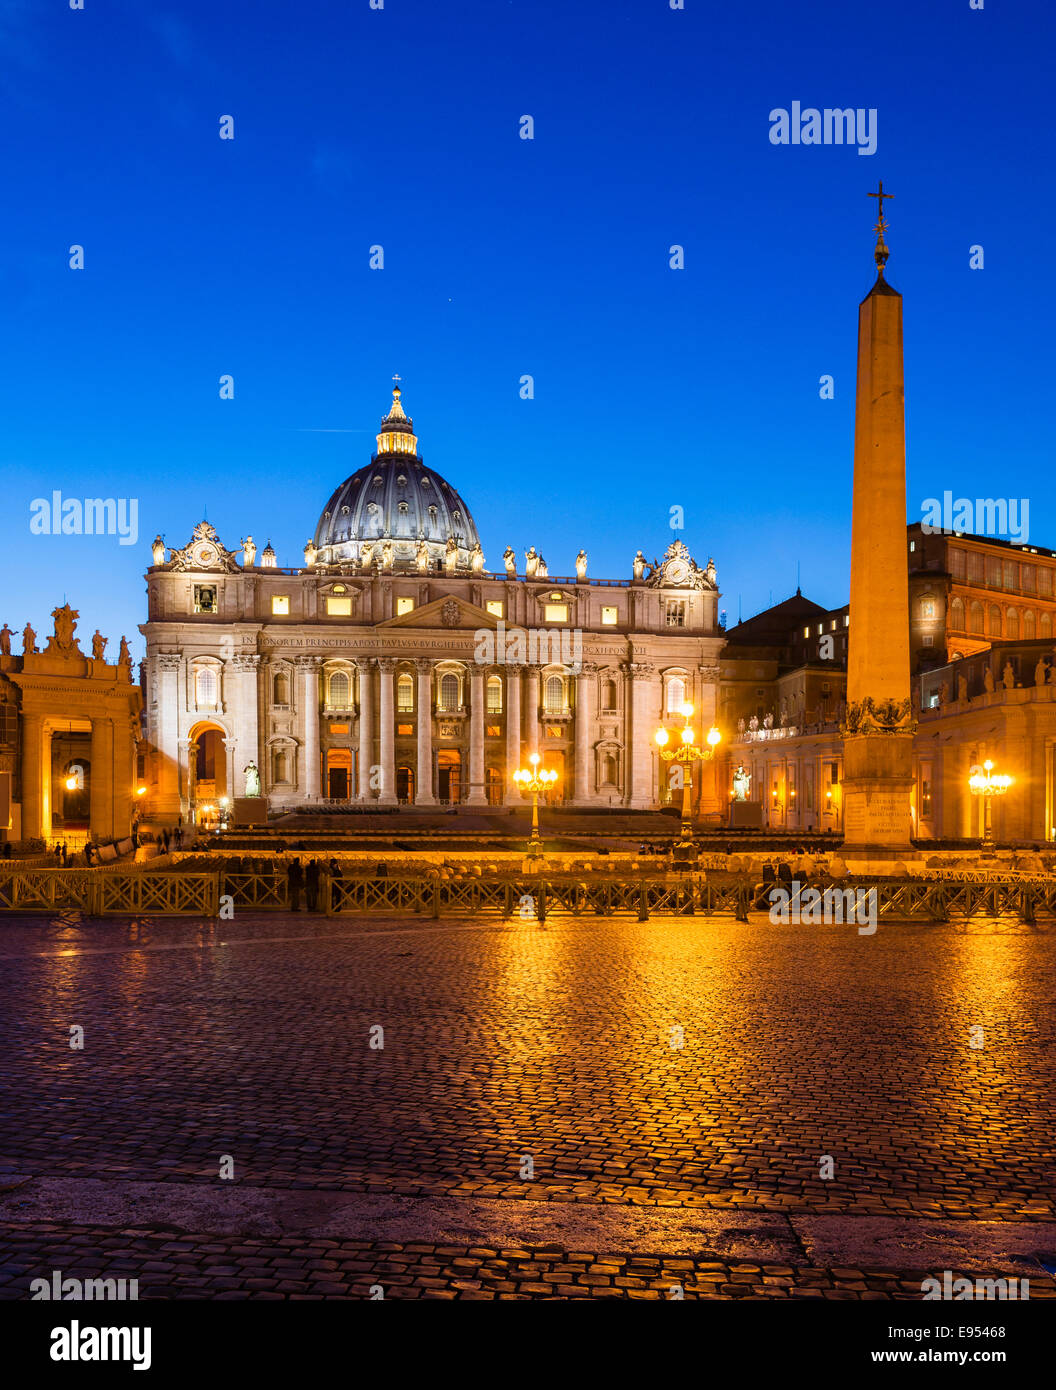 St. Peter's Basilica, Basilica di San Pietro, with Obelisk, St. Peter's Square, Vatican City, Vatican, Rome, Italy Stock Photo